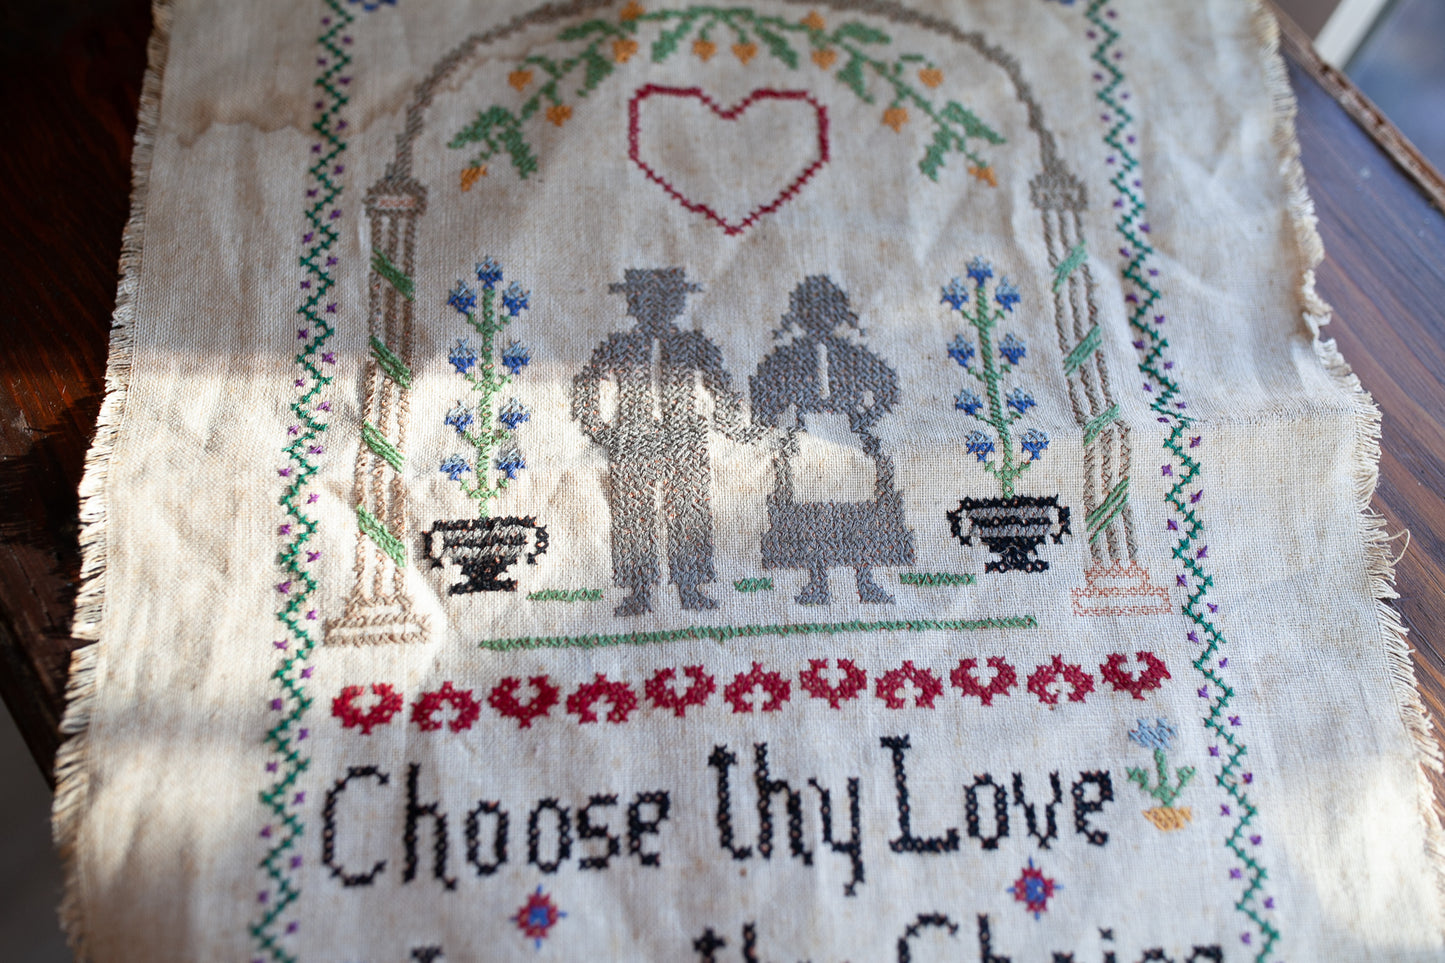 Antique Cross Stitch -Choose Thy Love Love Thy Choice - Vintage Sampler